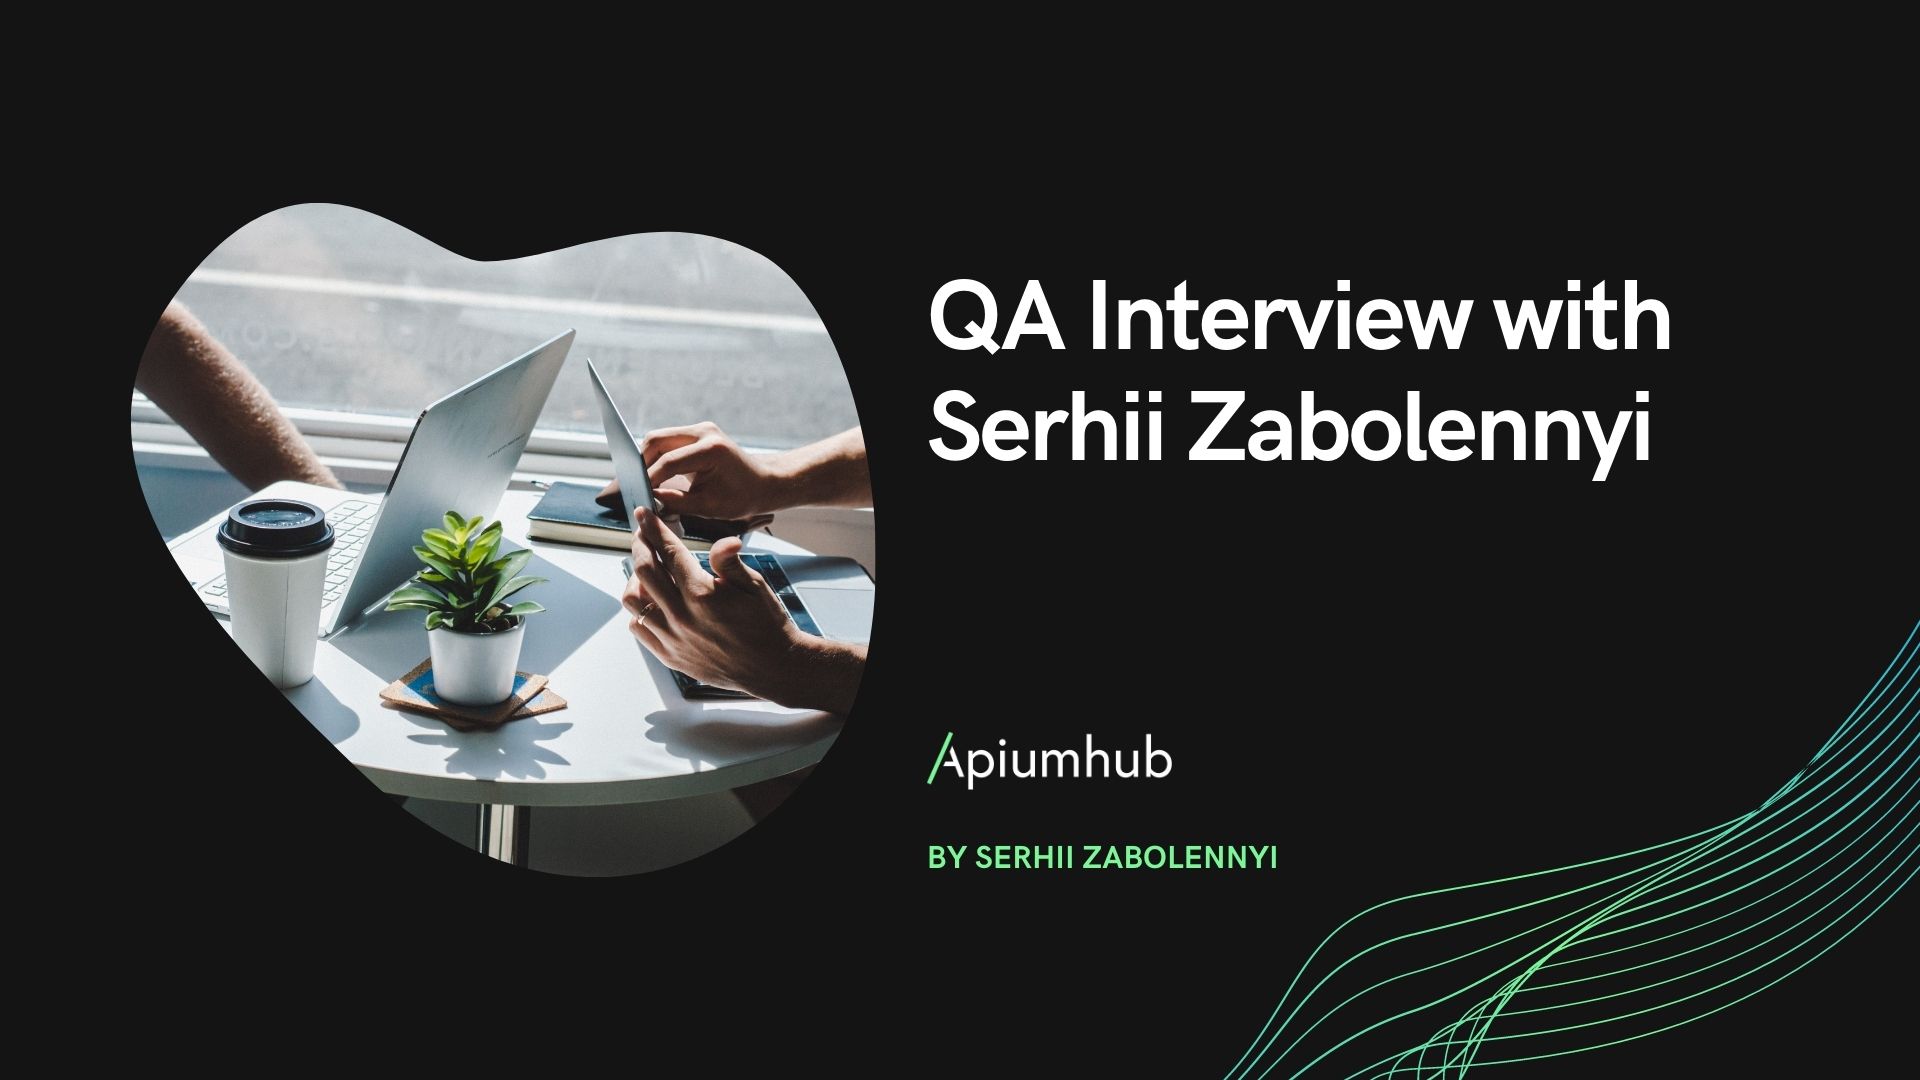 QA Interview with Serhii Zabolennyi - QA Automation engineer at Apiumhub